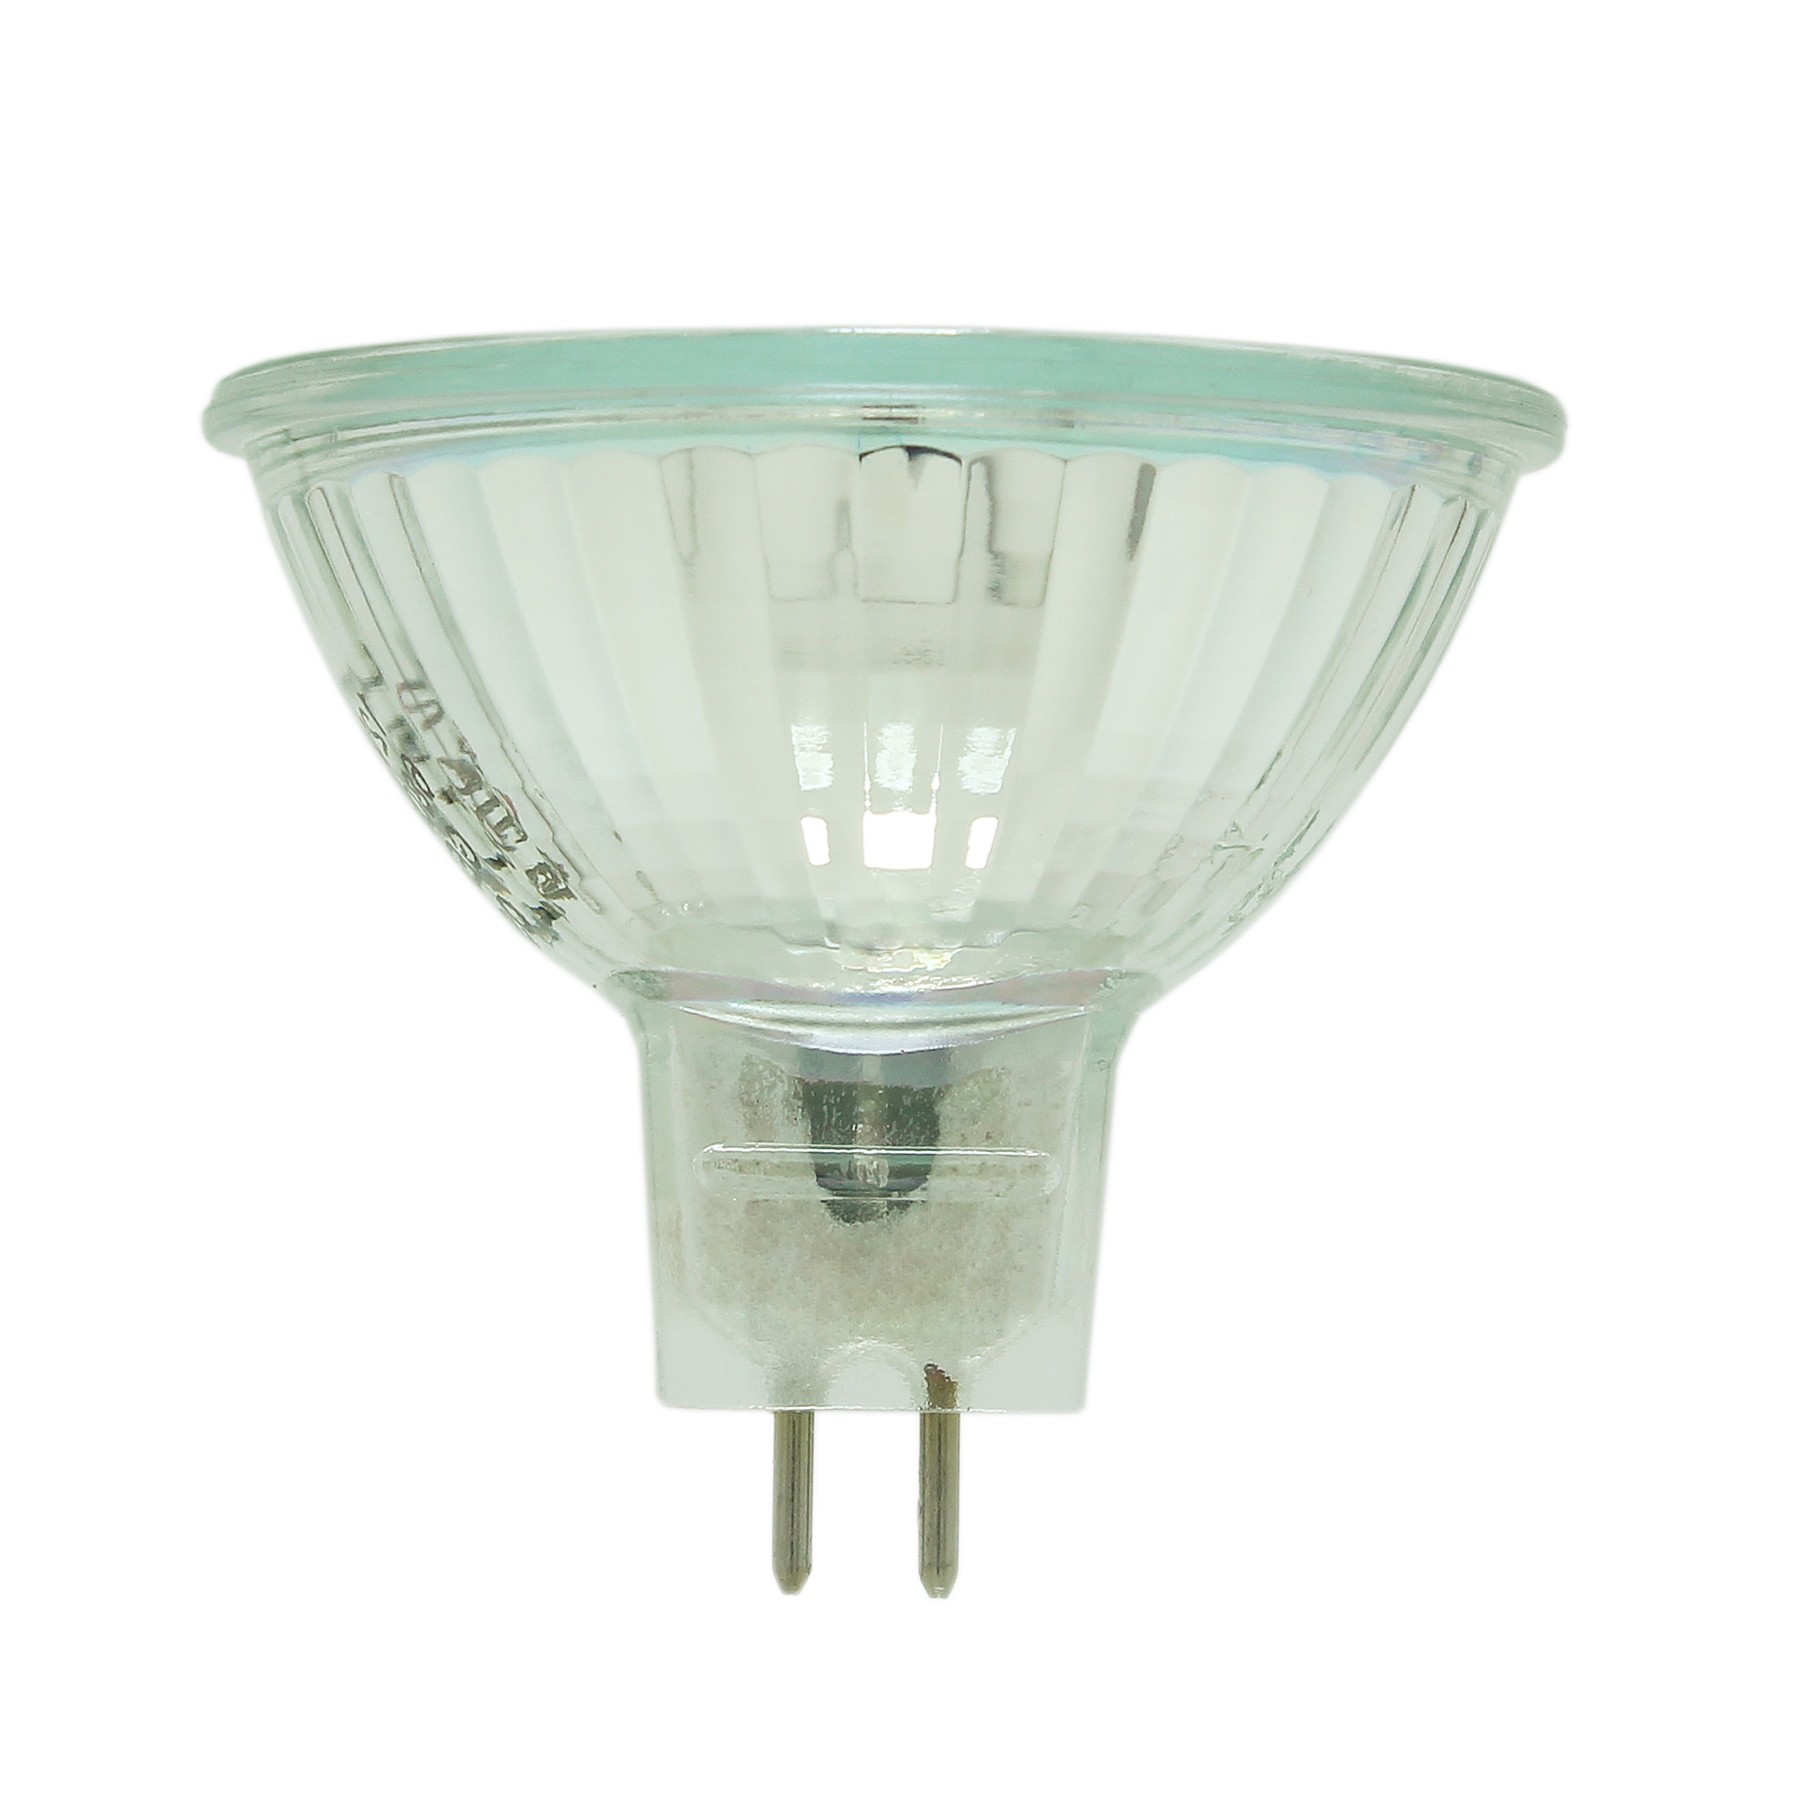 12x GU10 MR16 R63 R80 GU5.3 50W 240V HALOGEN REFLECTOR SPOT LAMP LIGHT BULBS 